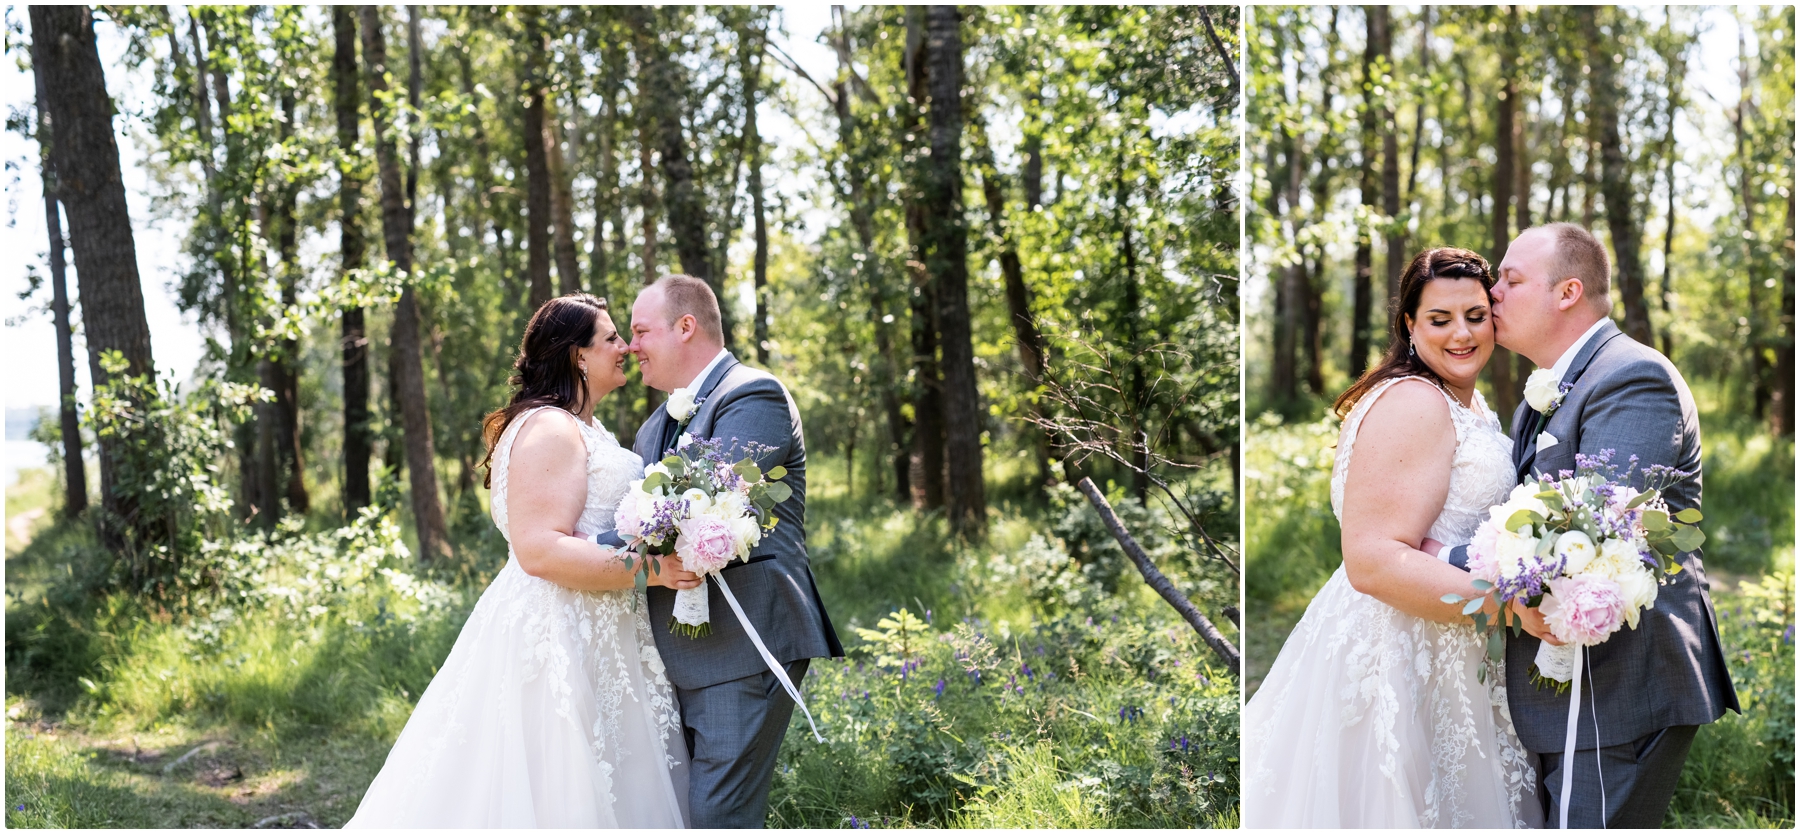 Calgary Wedding Photographer - Bride & groom Images